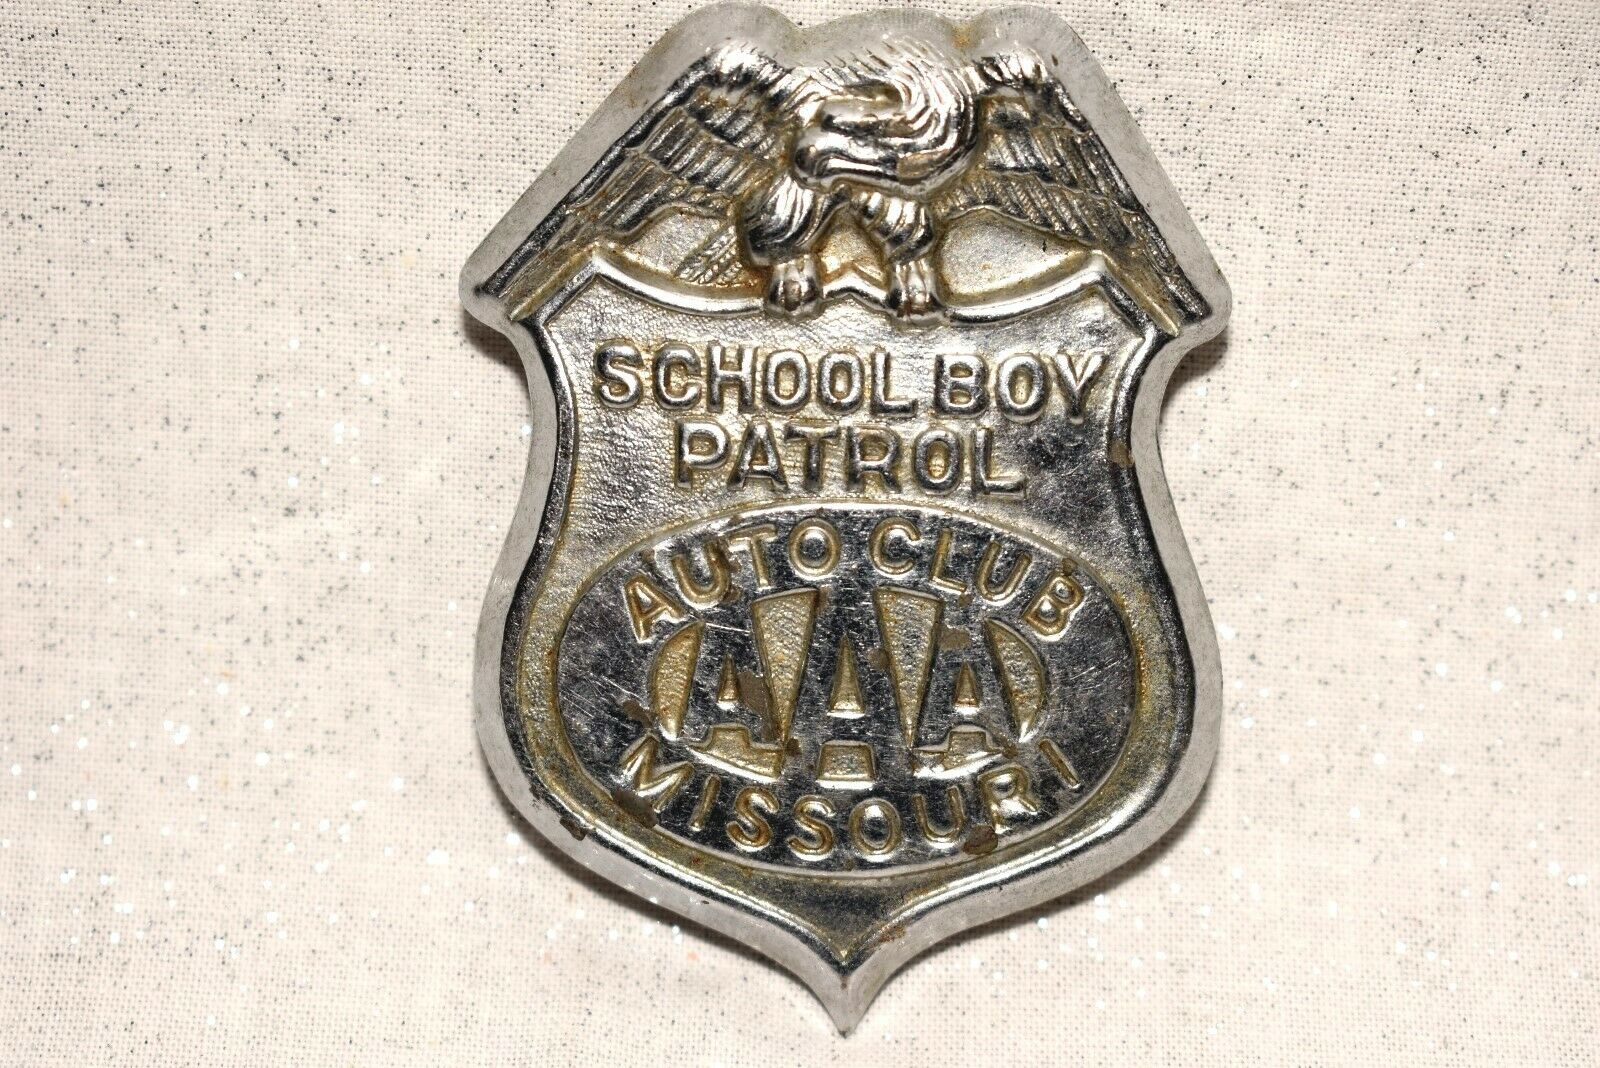 Vtg School Boy Patrol Badge, Aaa Auto Club Missouri, S.g. Adams Co. St Louis